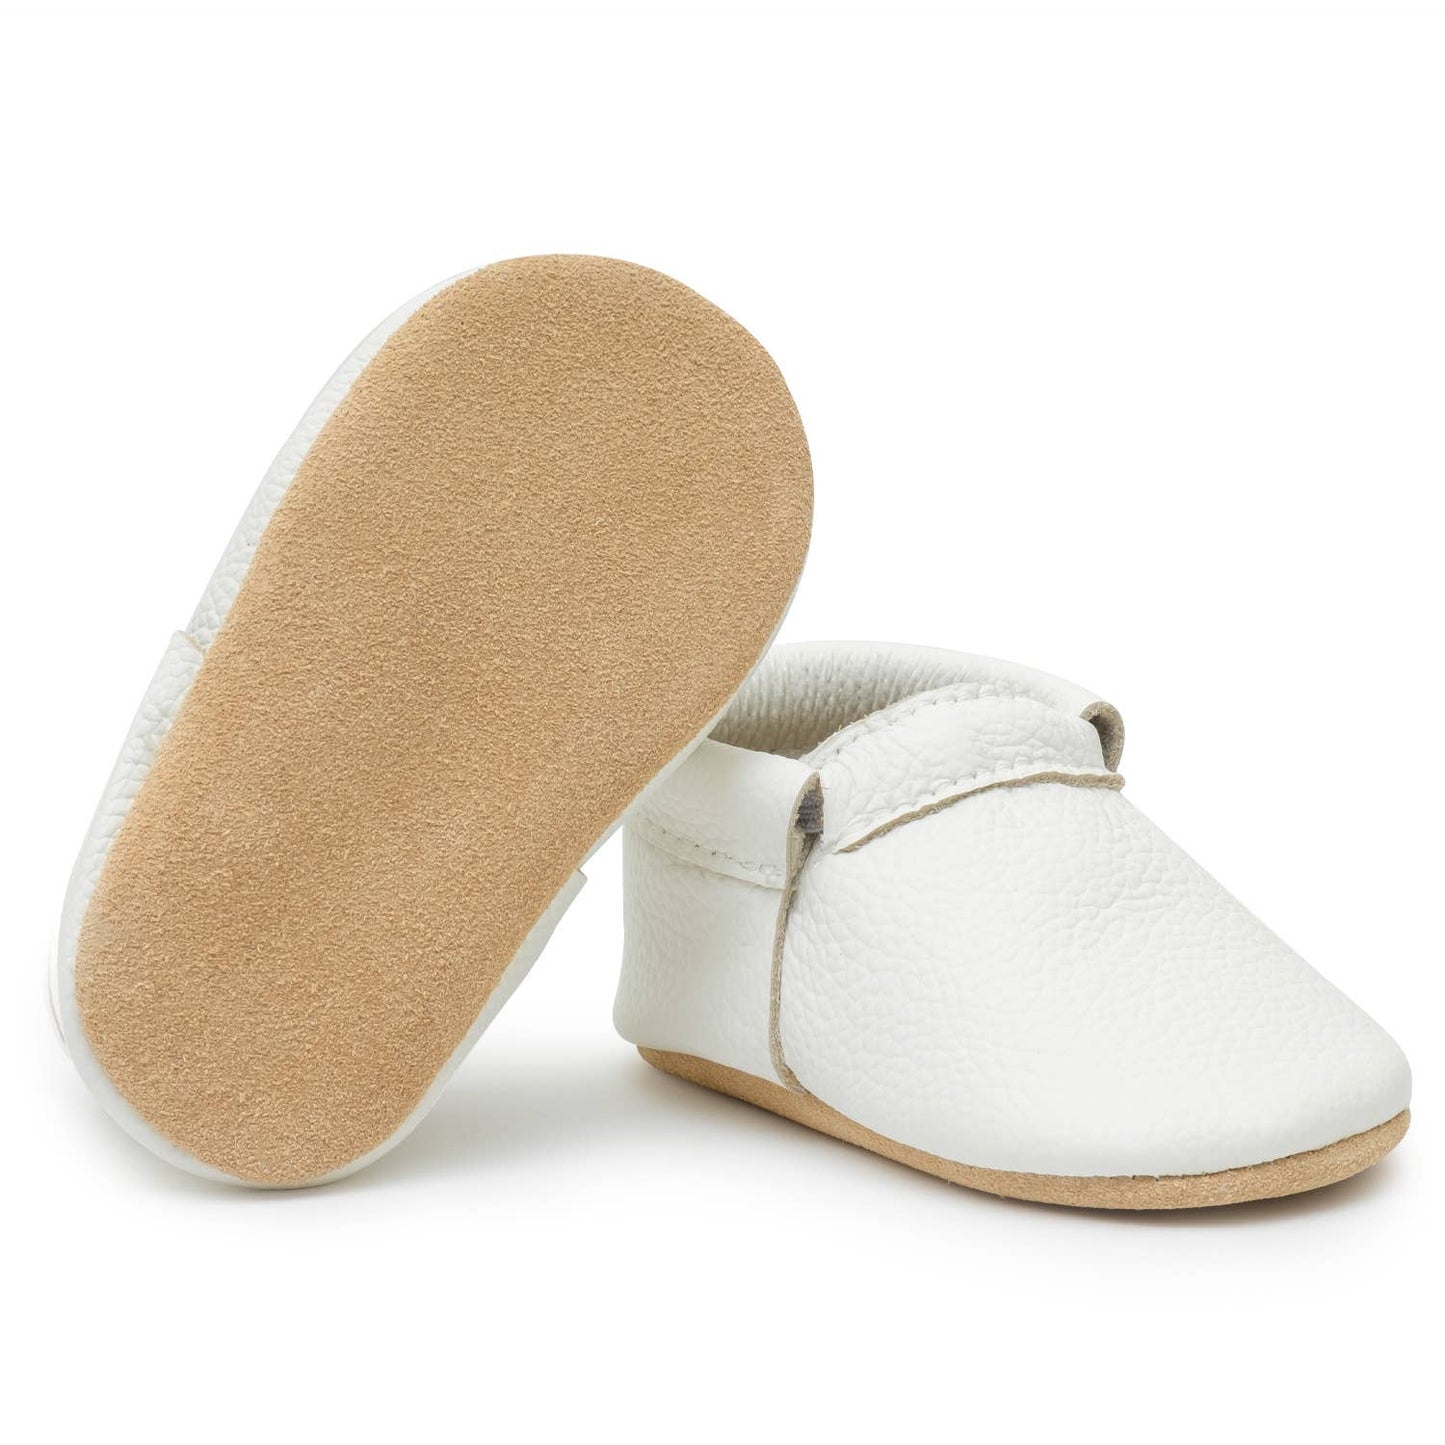 Fringeless Baby Moccasins - Leather Baby Shoes (Seashell)